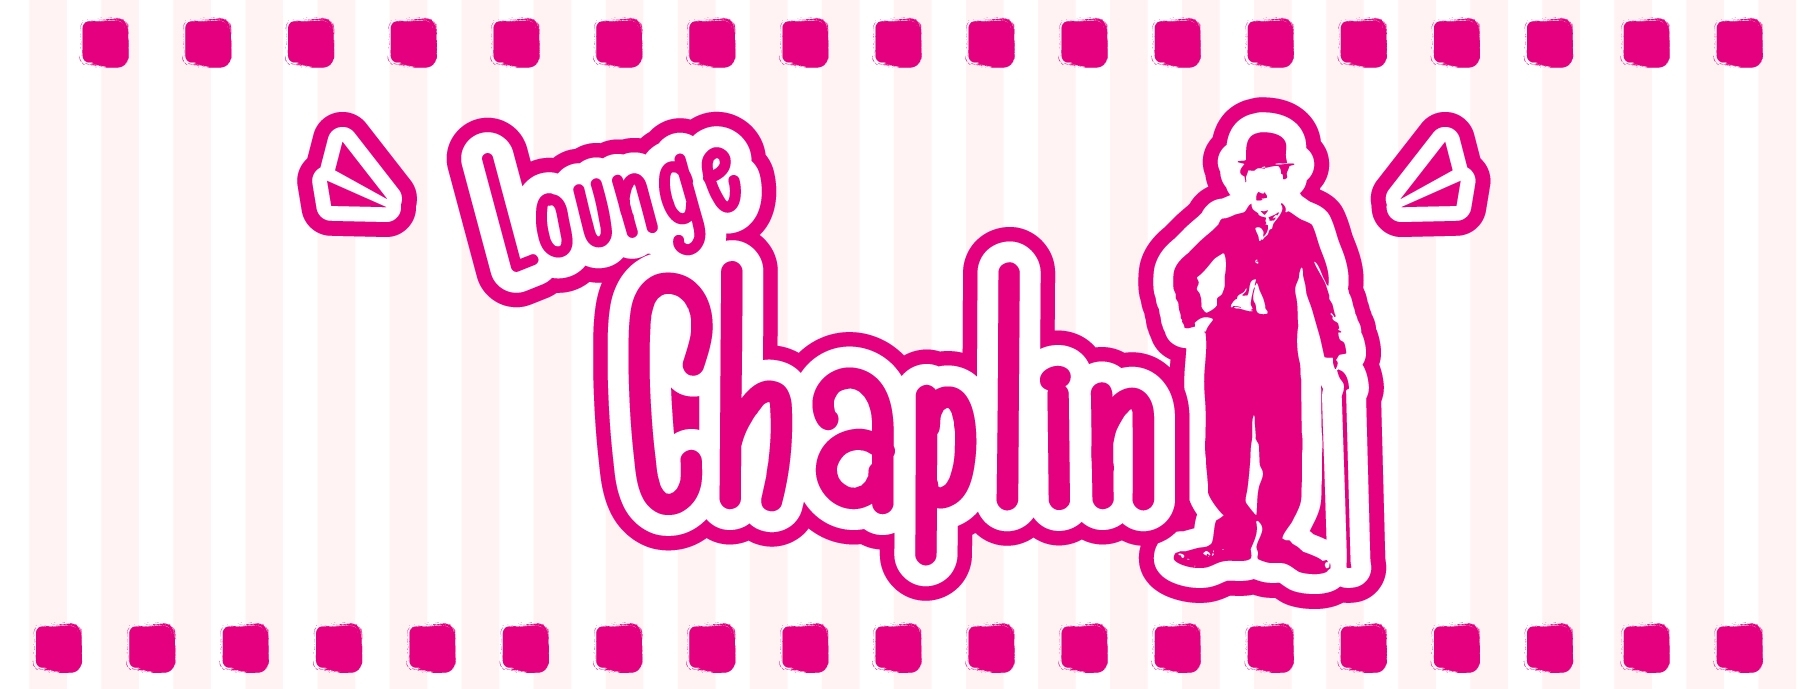 Lounge Chaplin